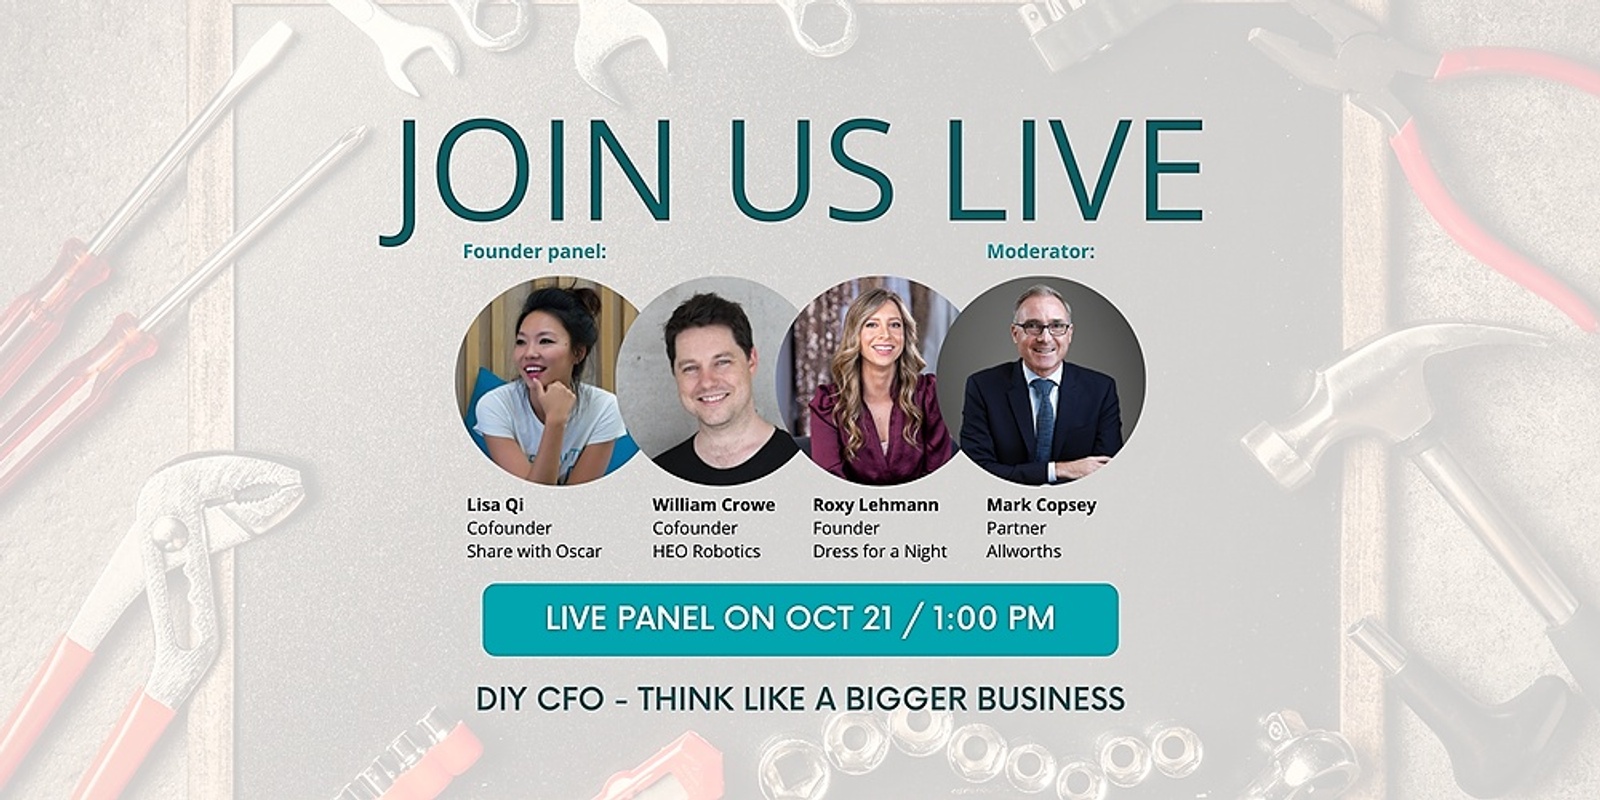 Banner image for DiY CFO - Thinking like a bigger business